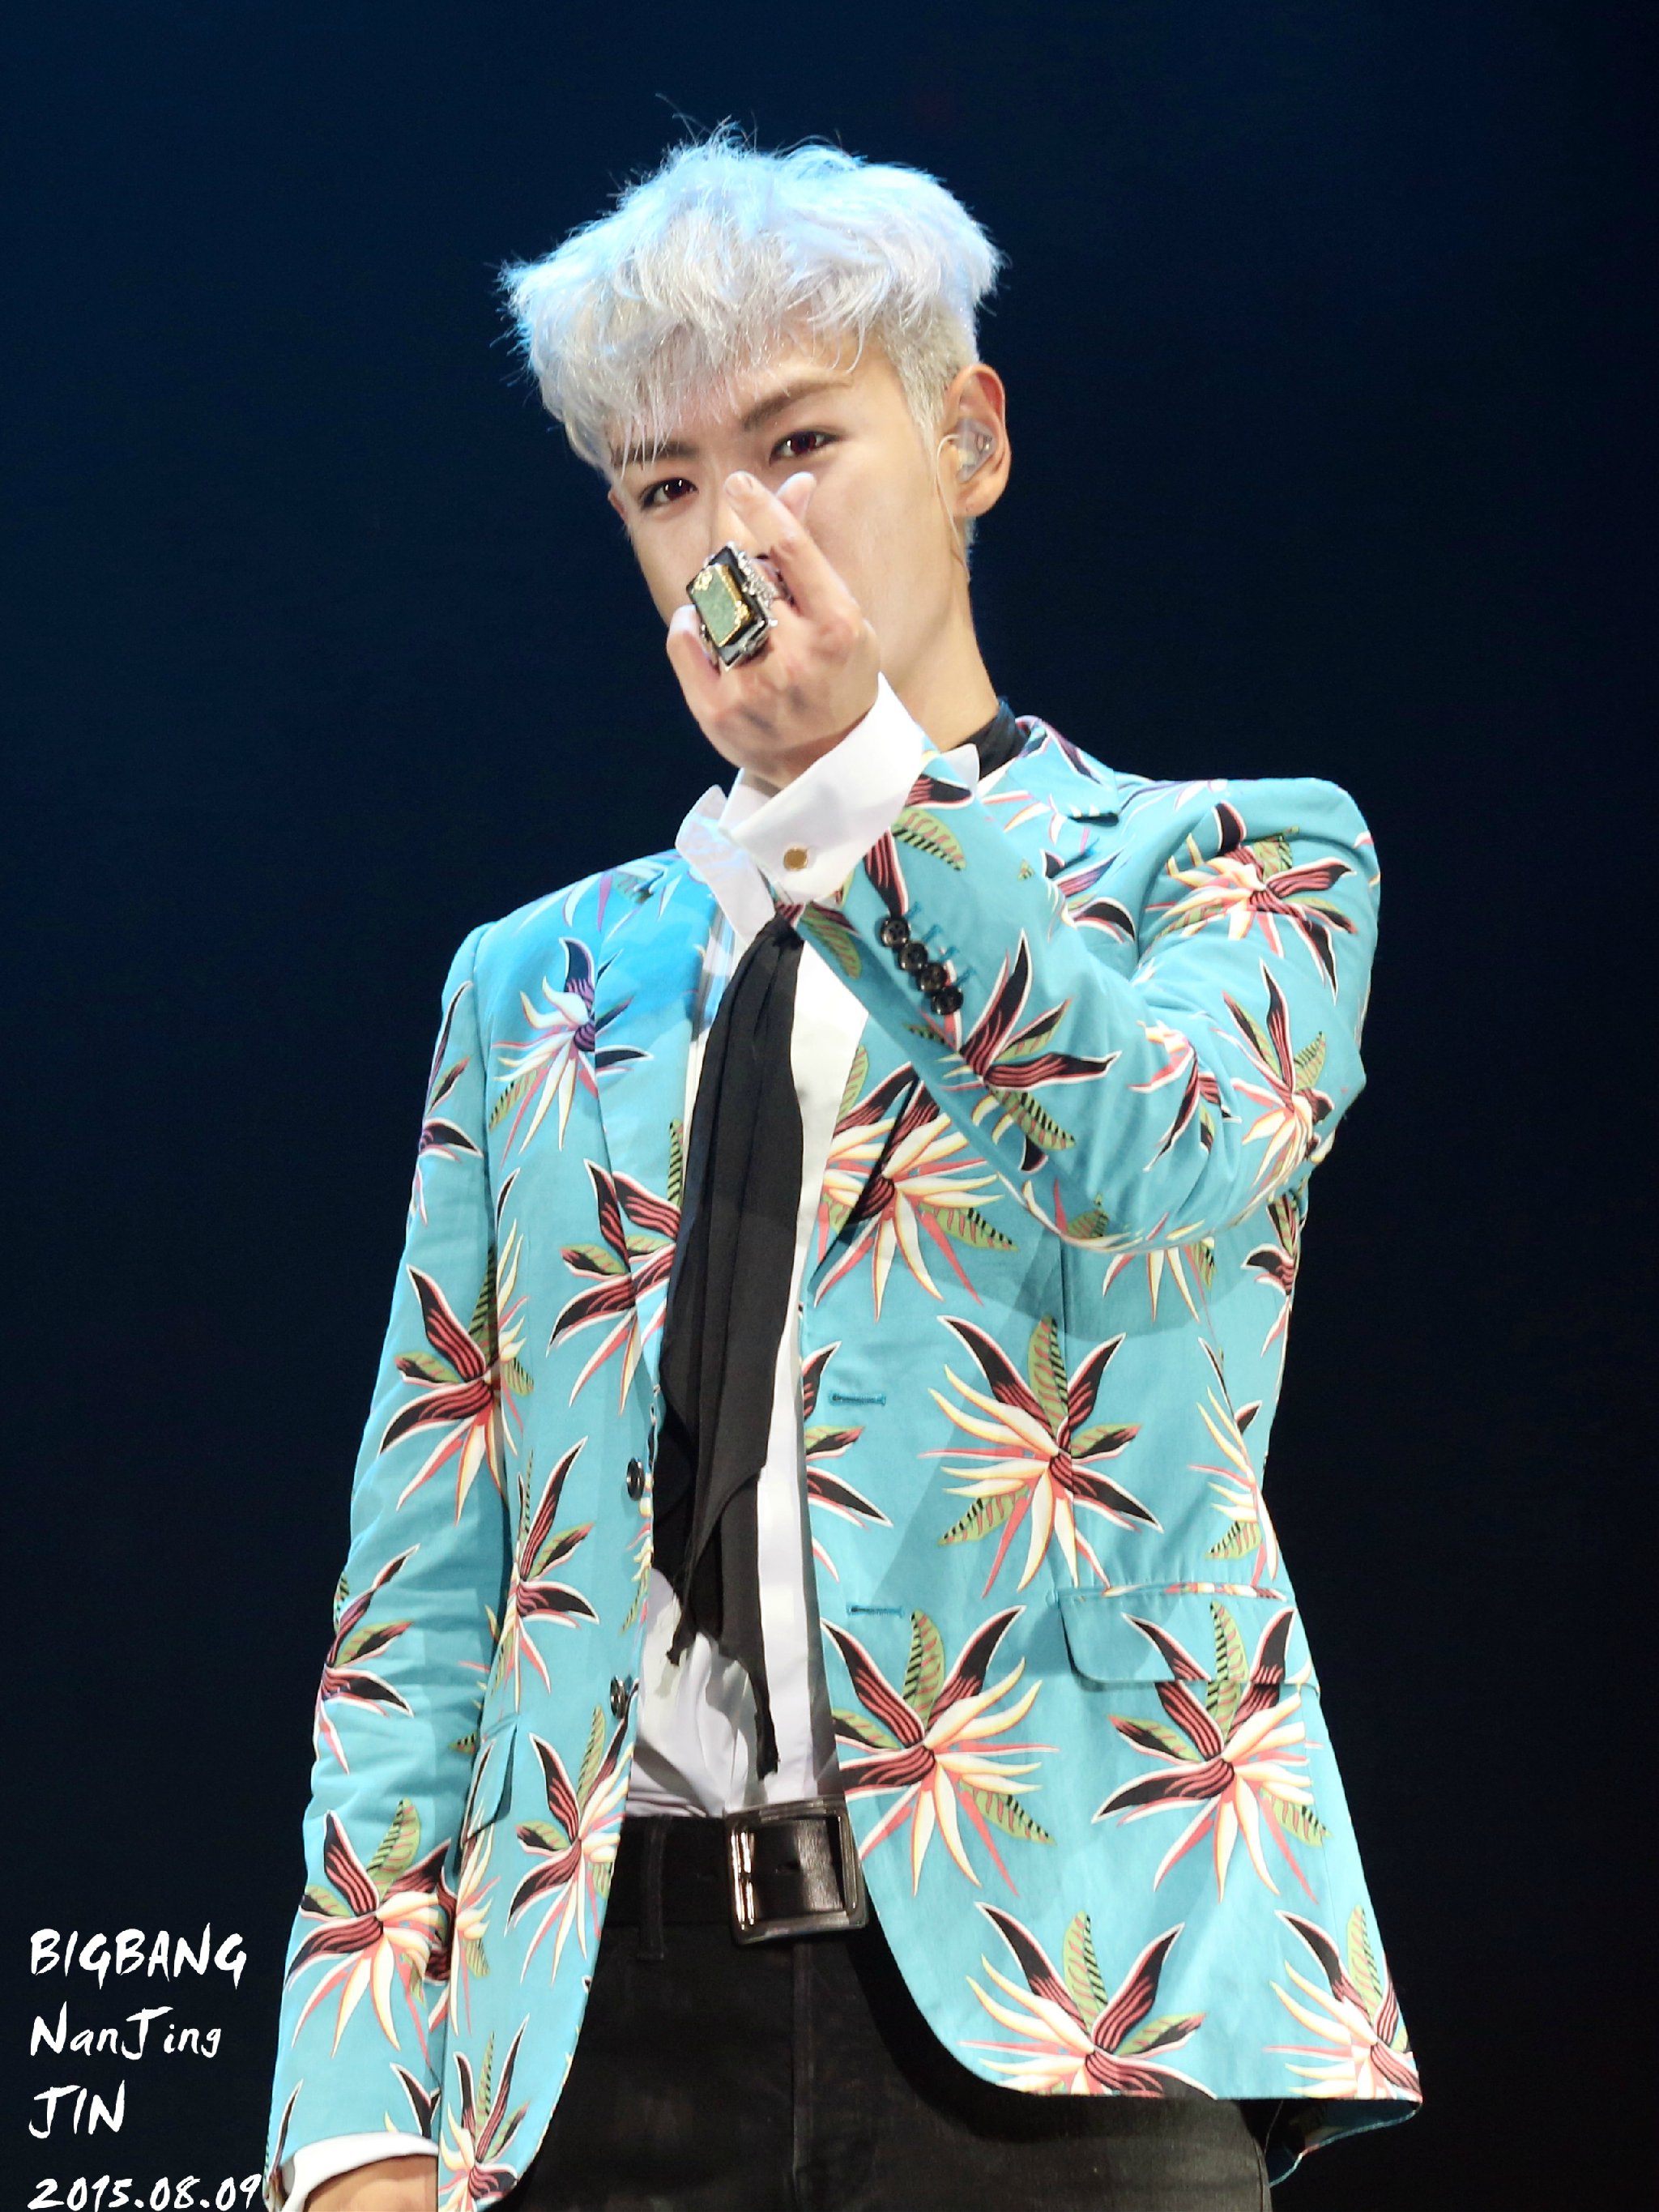 BIGBANG TOP Nanjing 2015-08-09 HQs (3).jpg